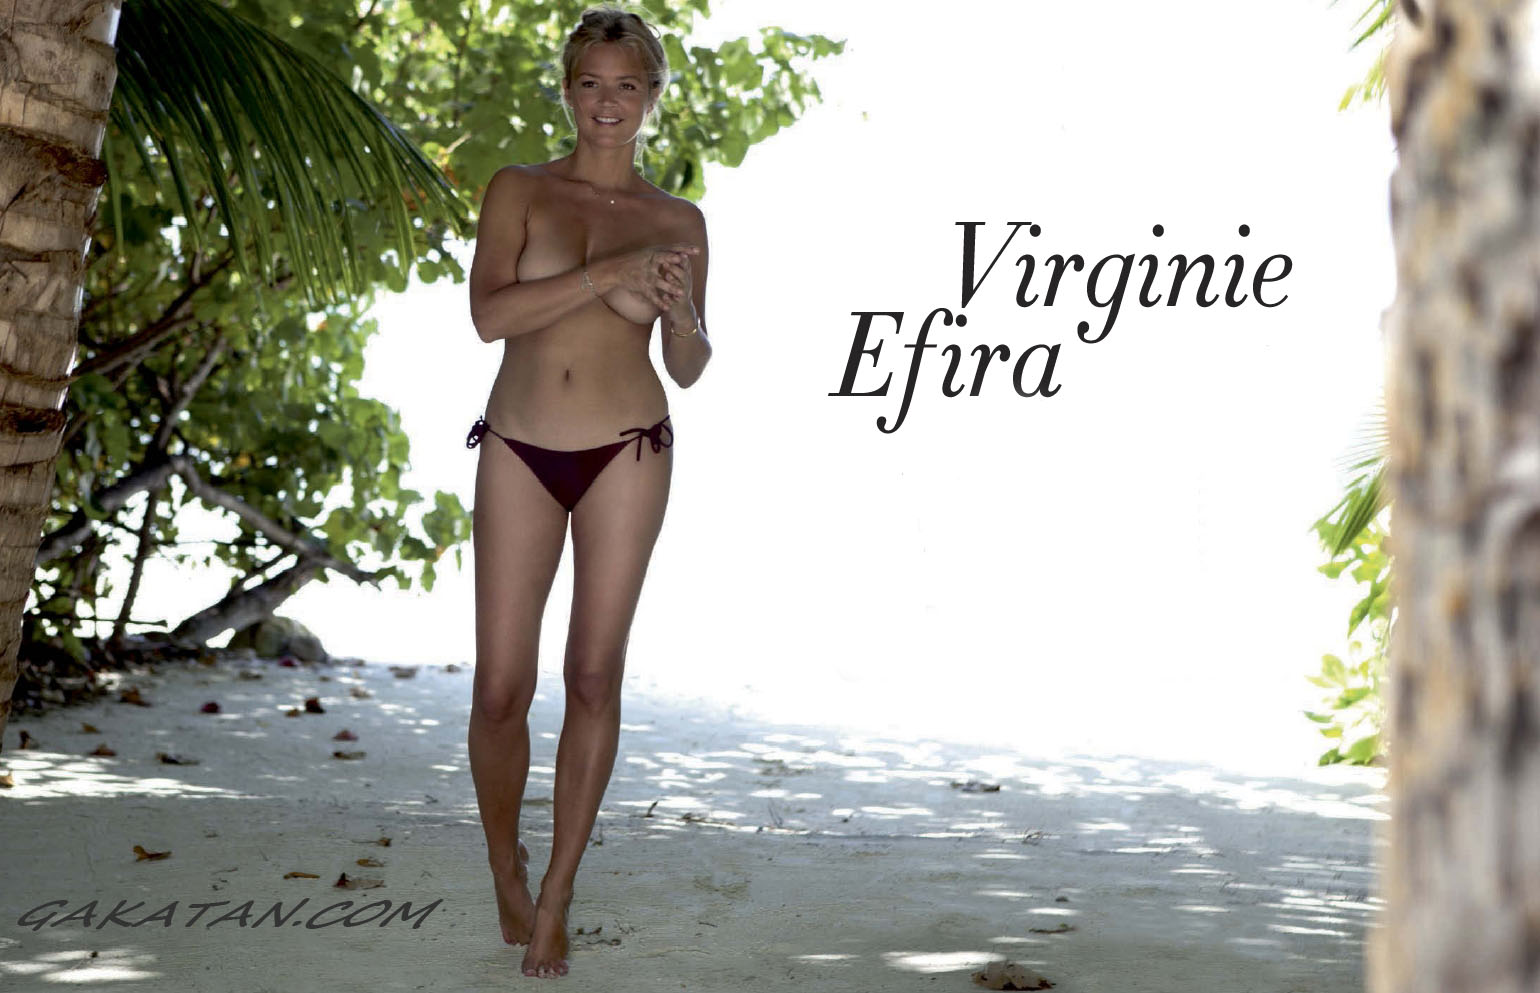 Virginie Efira nue (topless) – Paris Match 3266 (photos) | 1pic1day